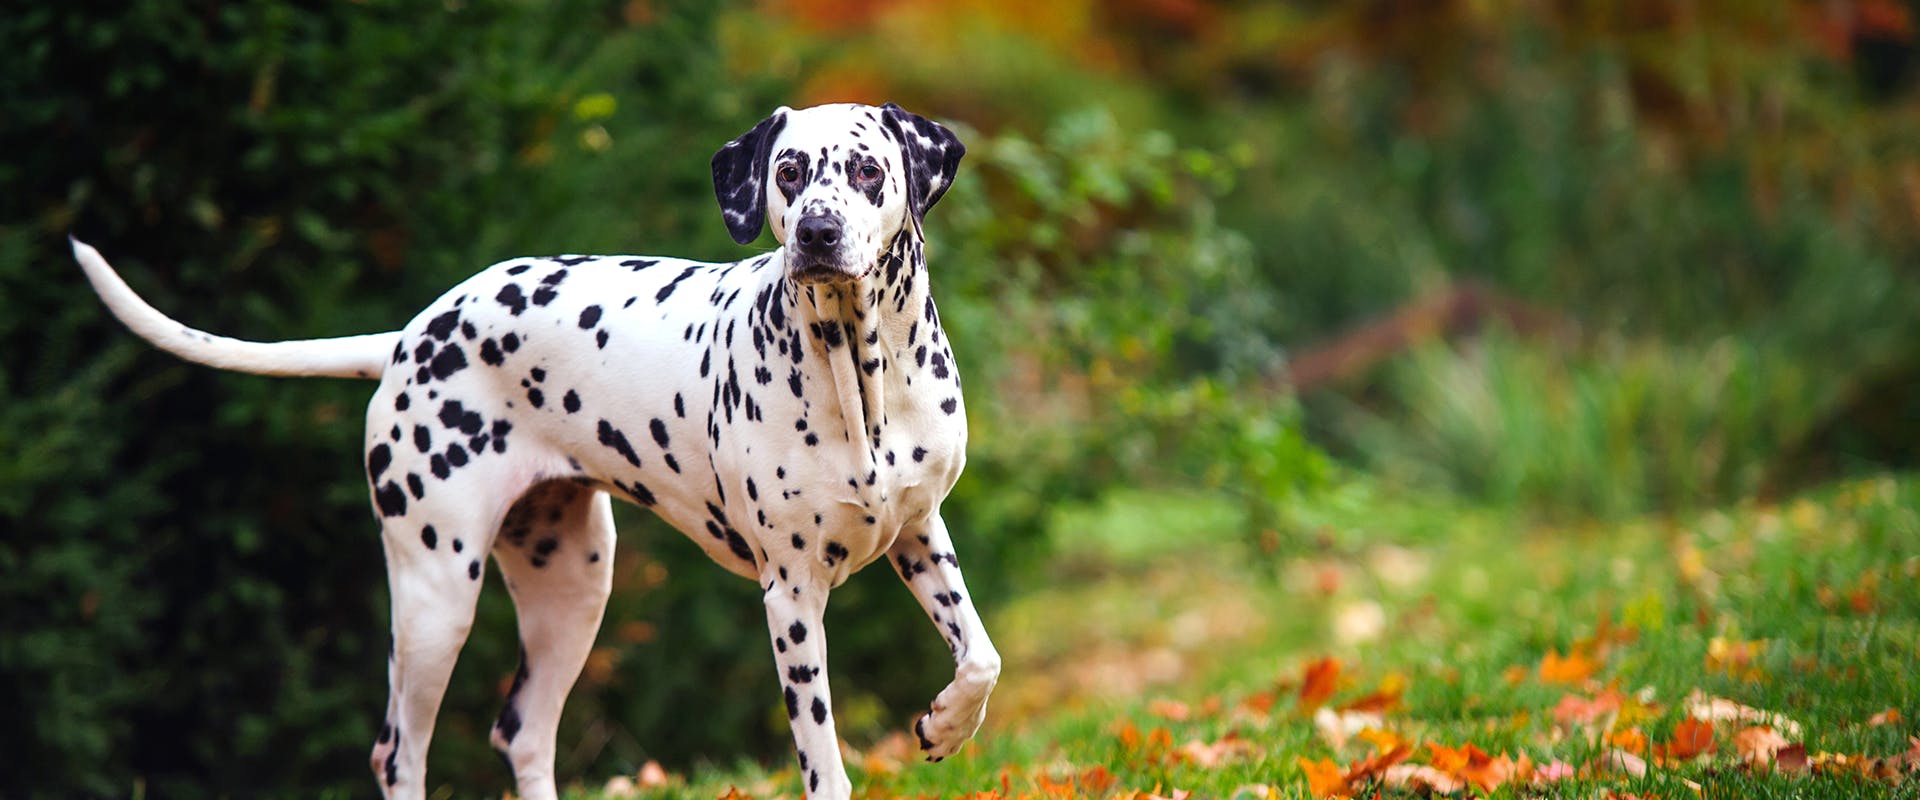 A Dalmatian, a popular firehouse dog